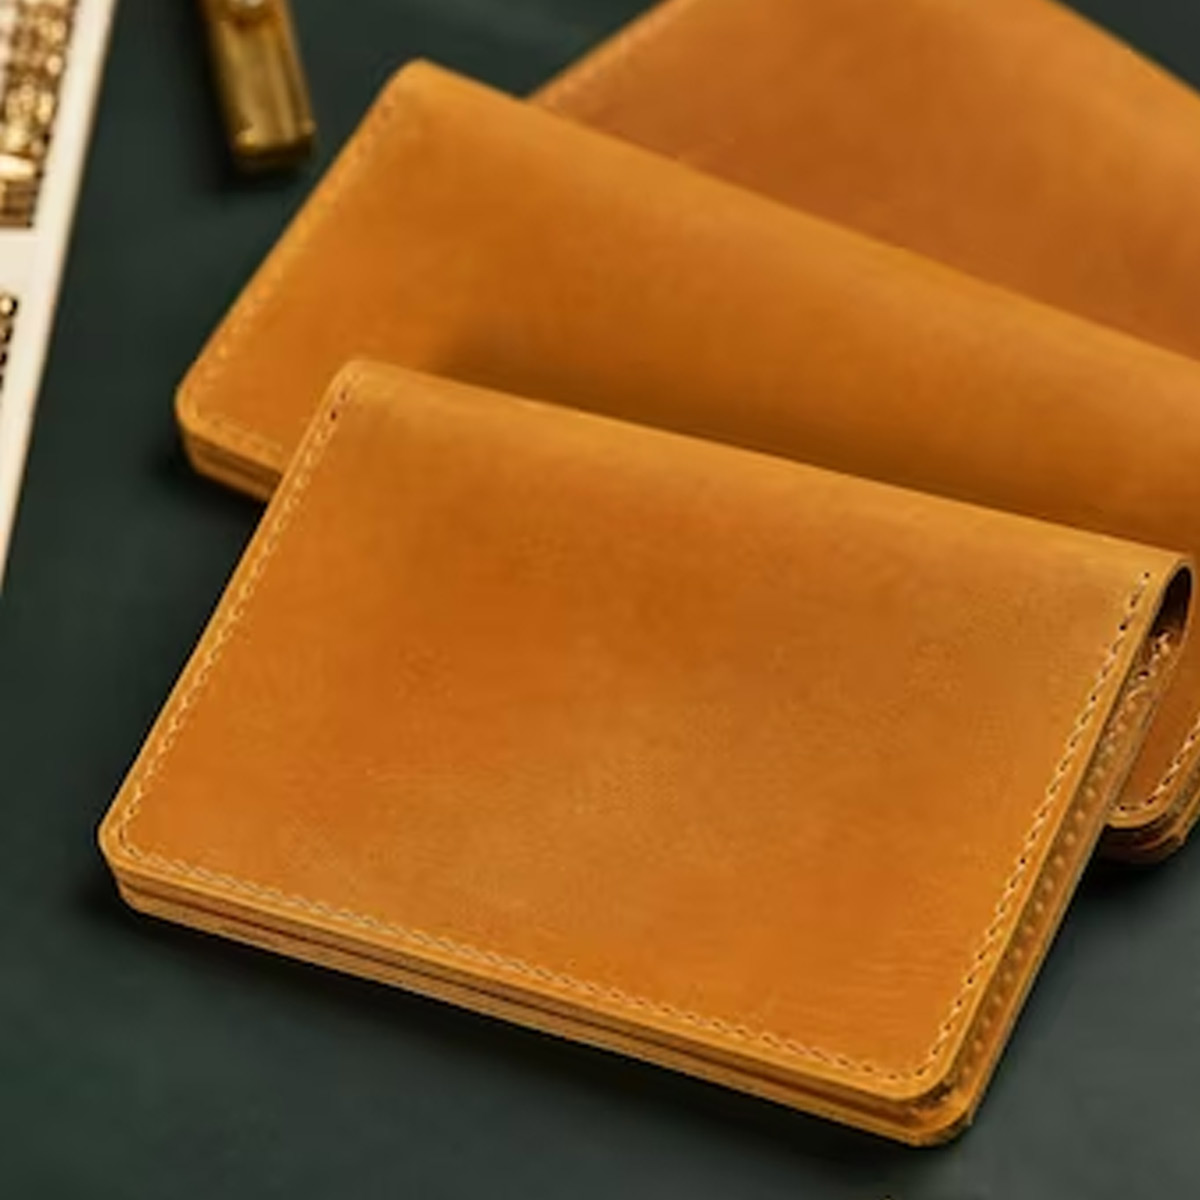 golden colour wallet for money